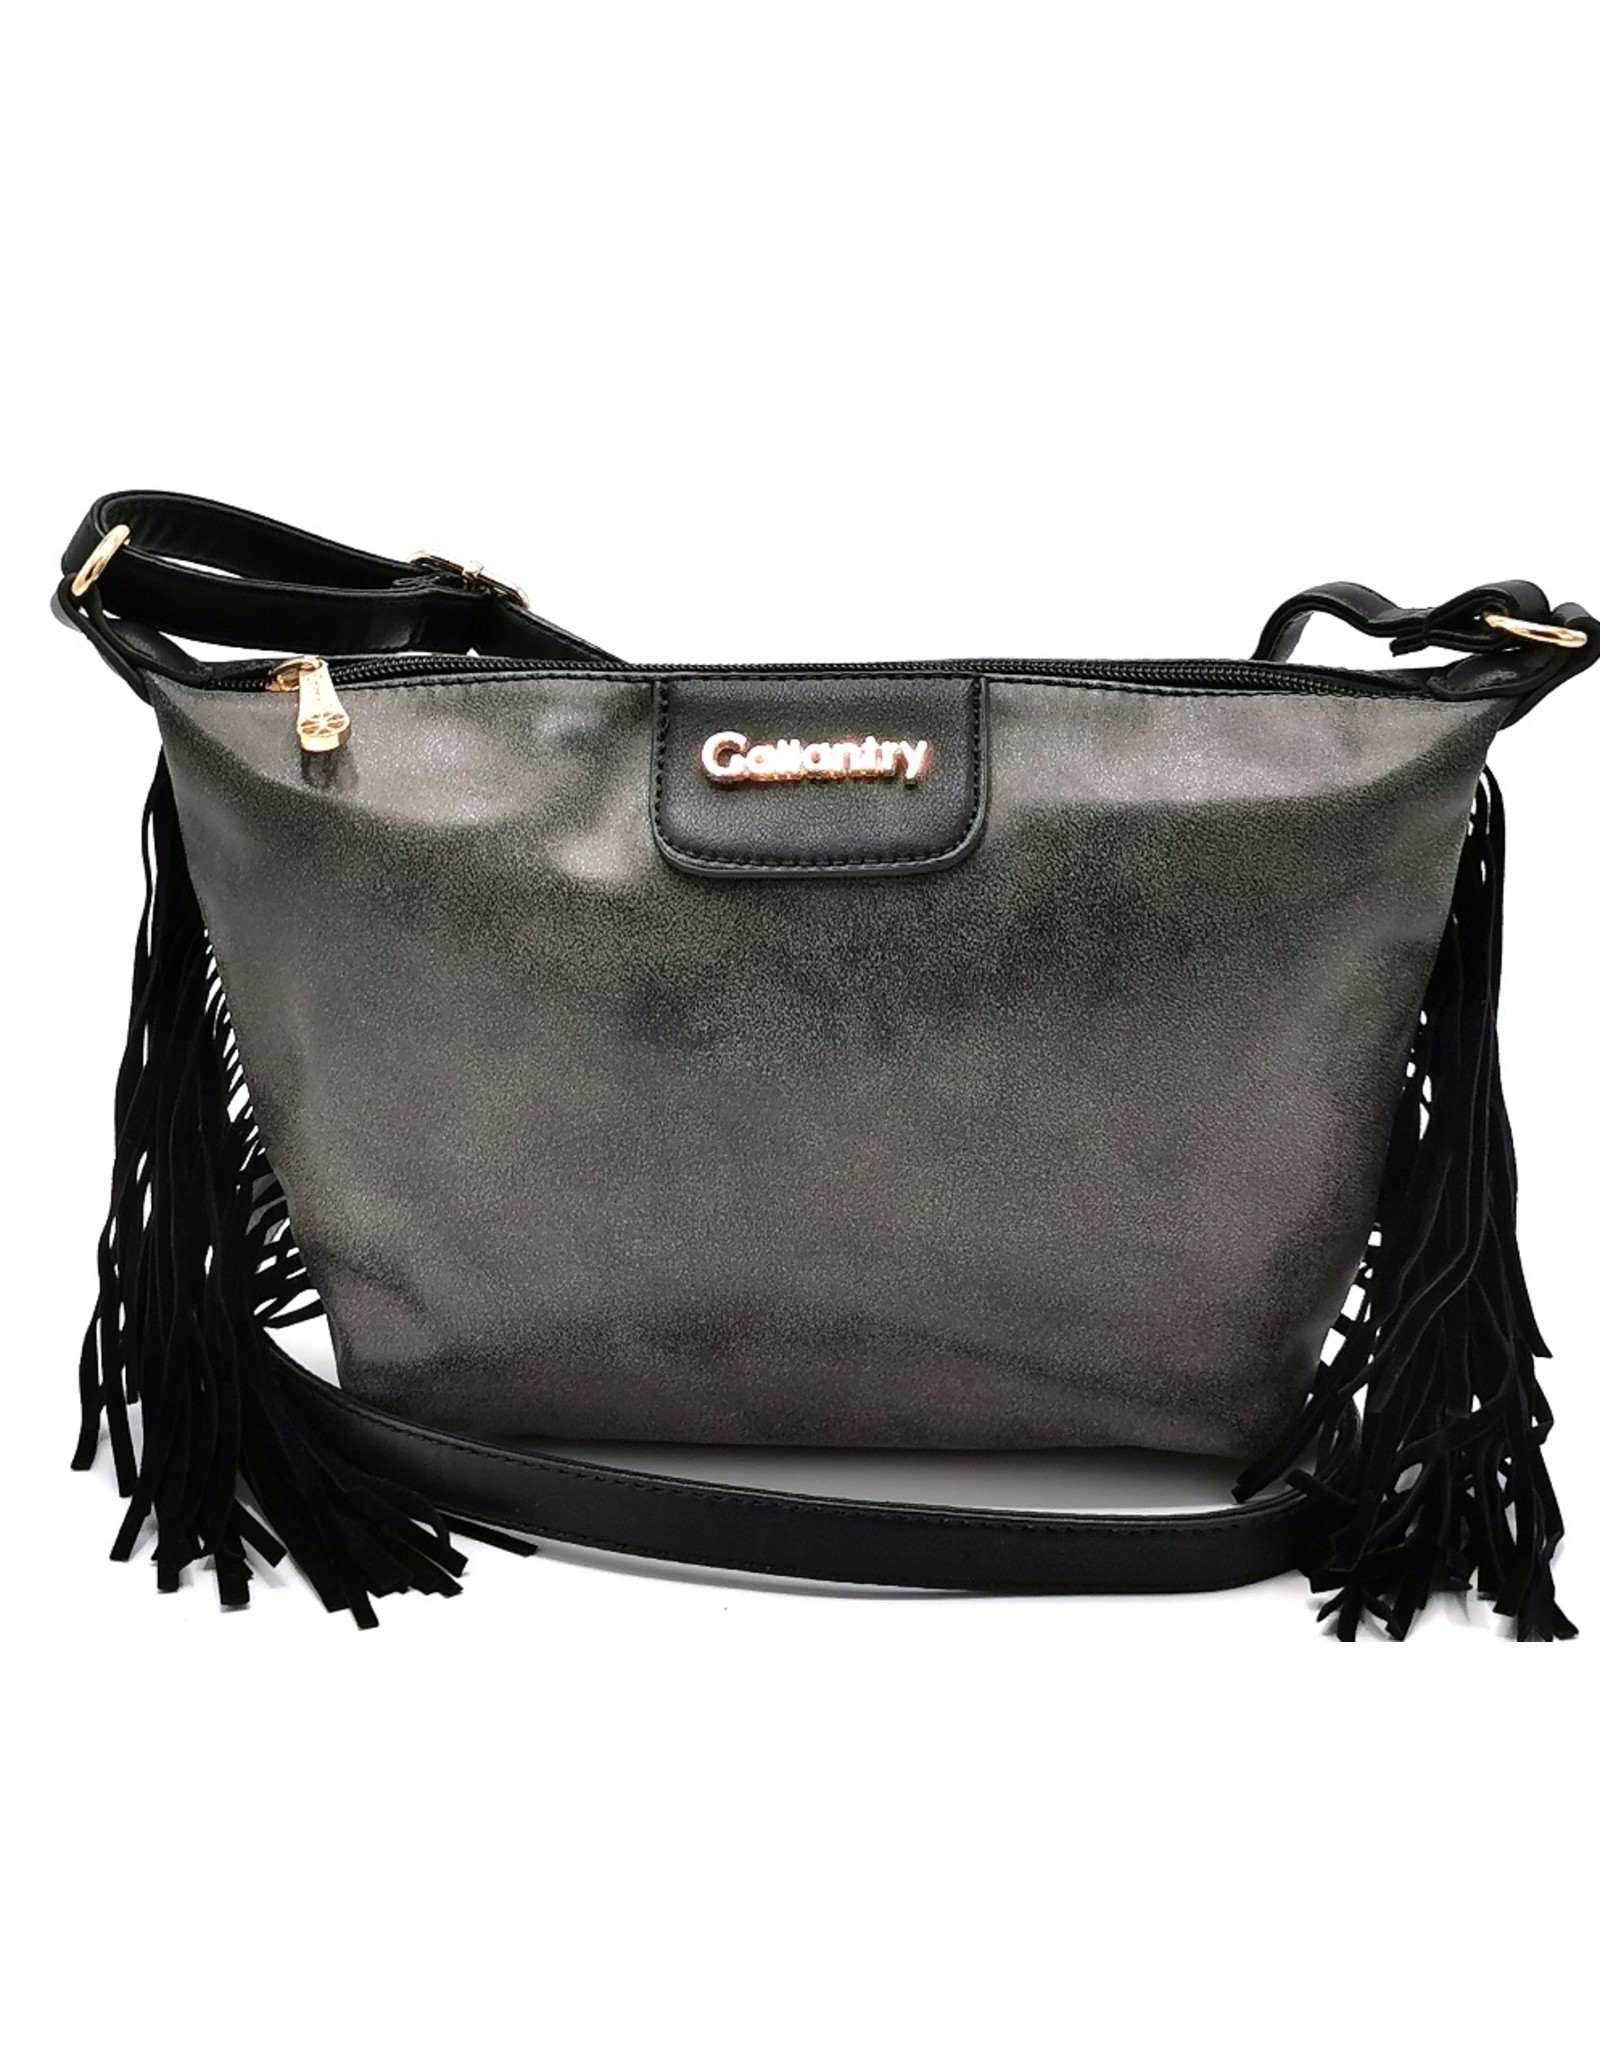 Gallantry Fashion bags - Galantry Shoulder Bag with Fringes black